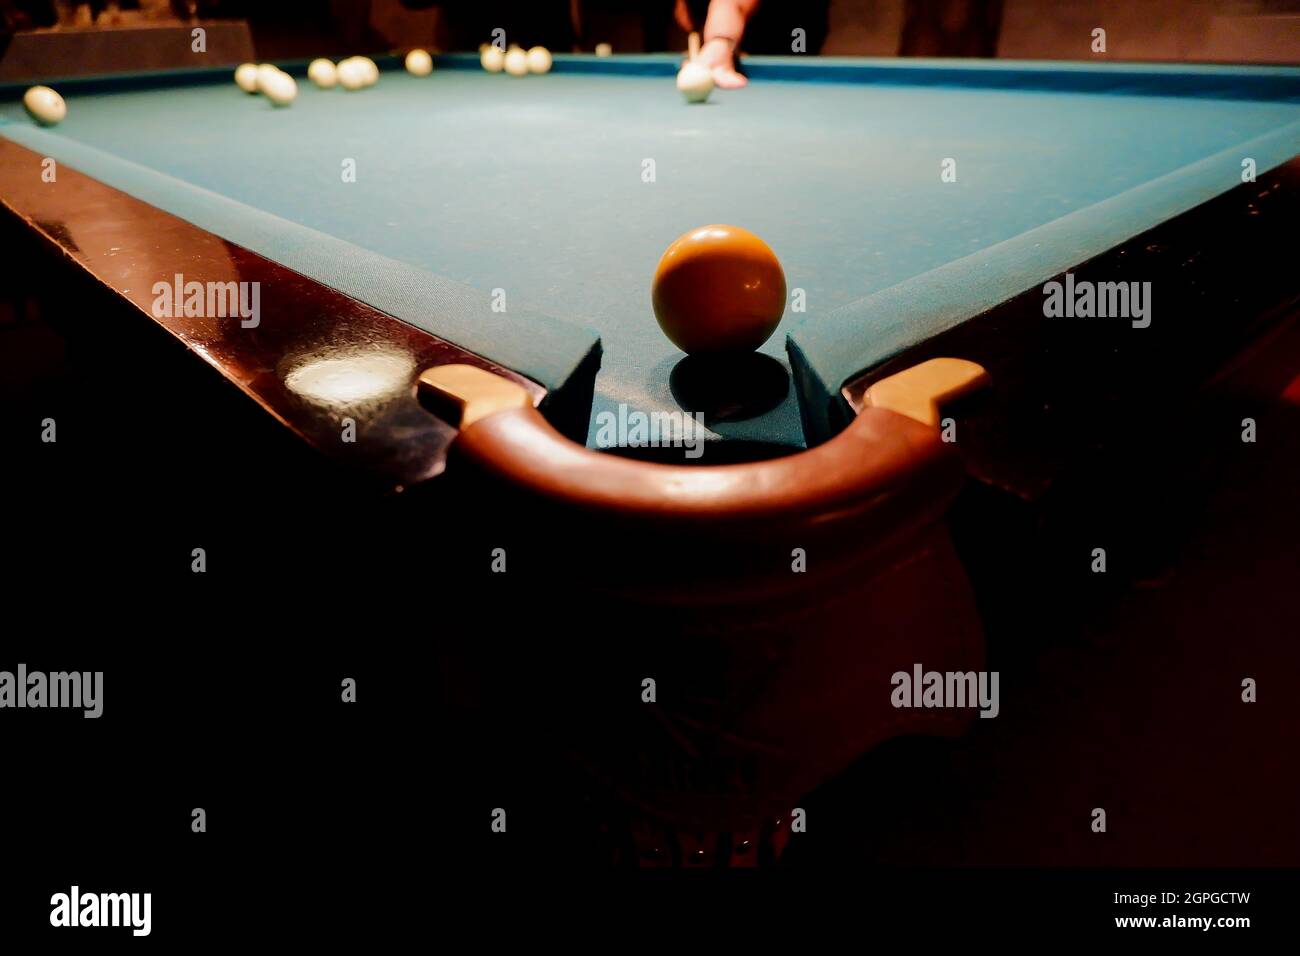 DP On Billiard Table